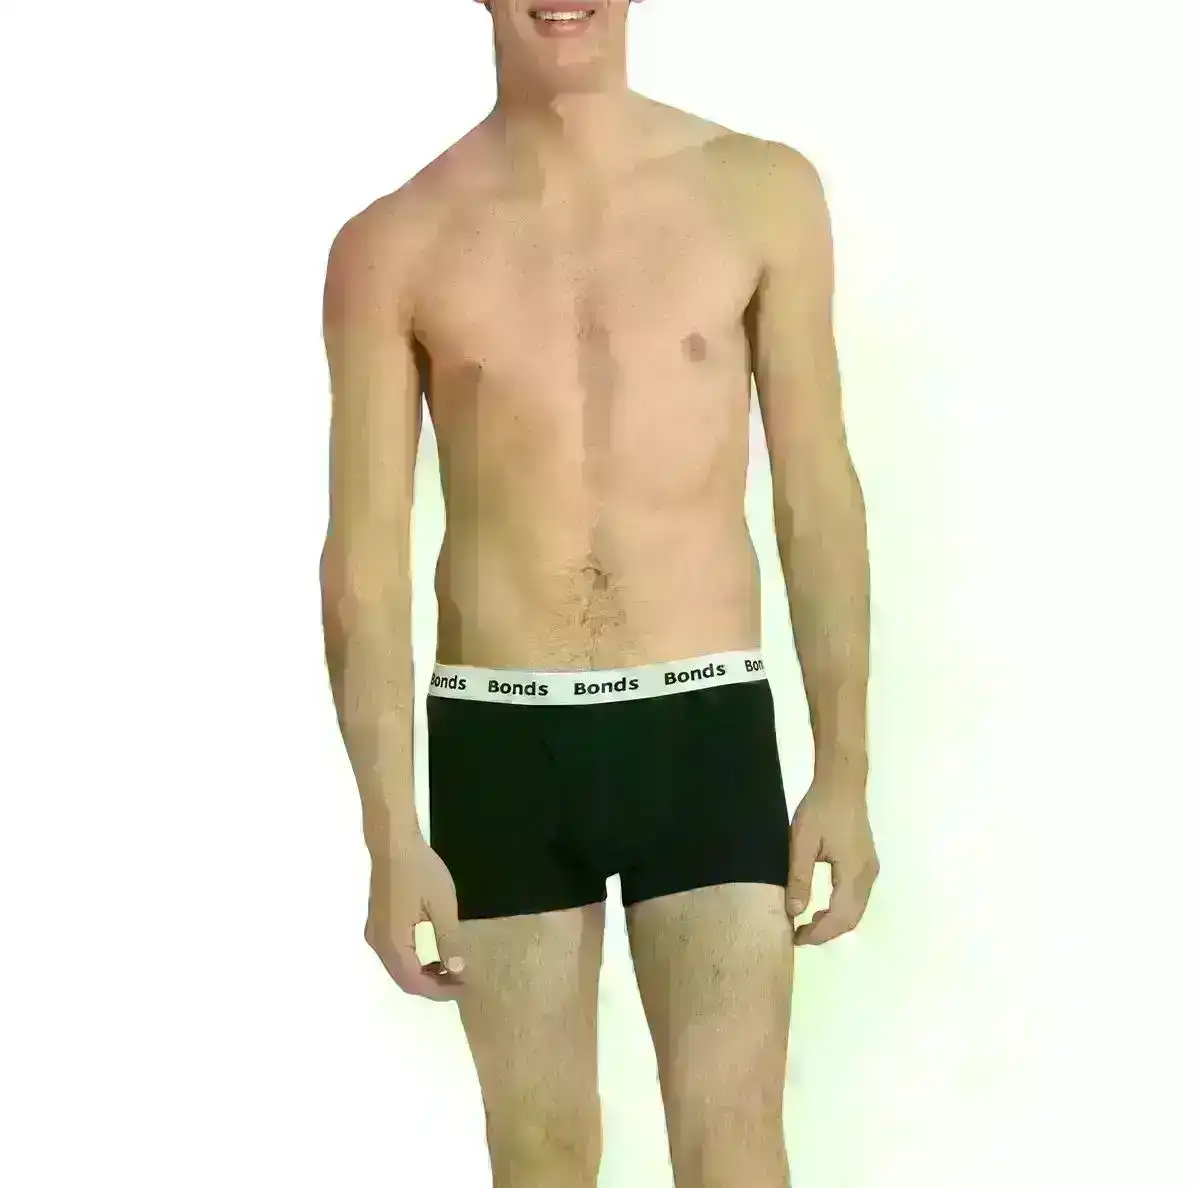 12 X Bonds Everyday Trunks Mens Underwear Assorted Shorts Briefs Jocks, Australian Fashion Boutique